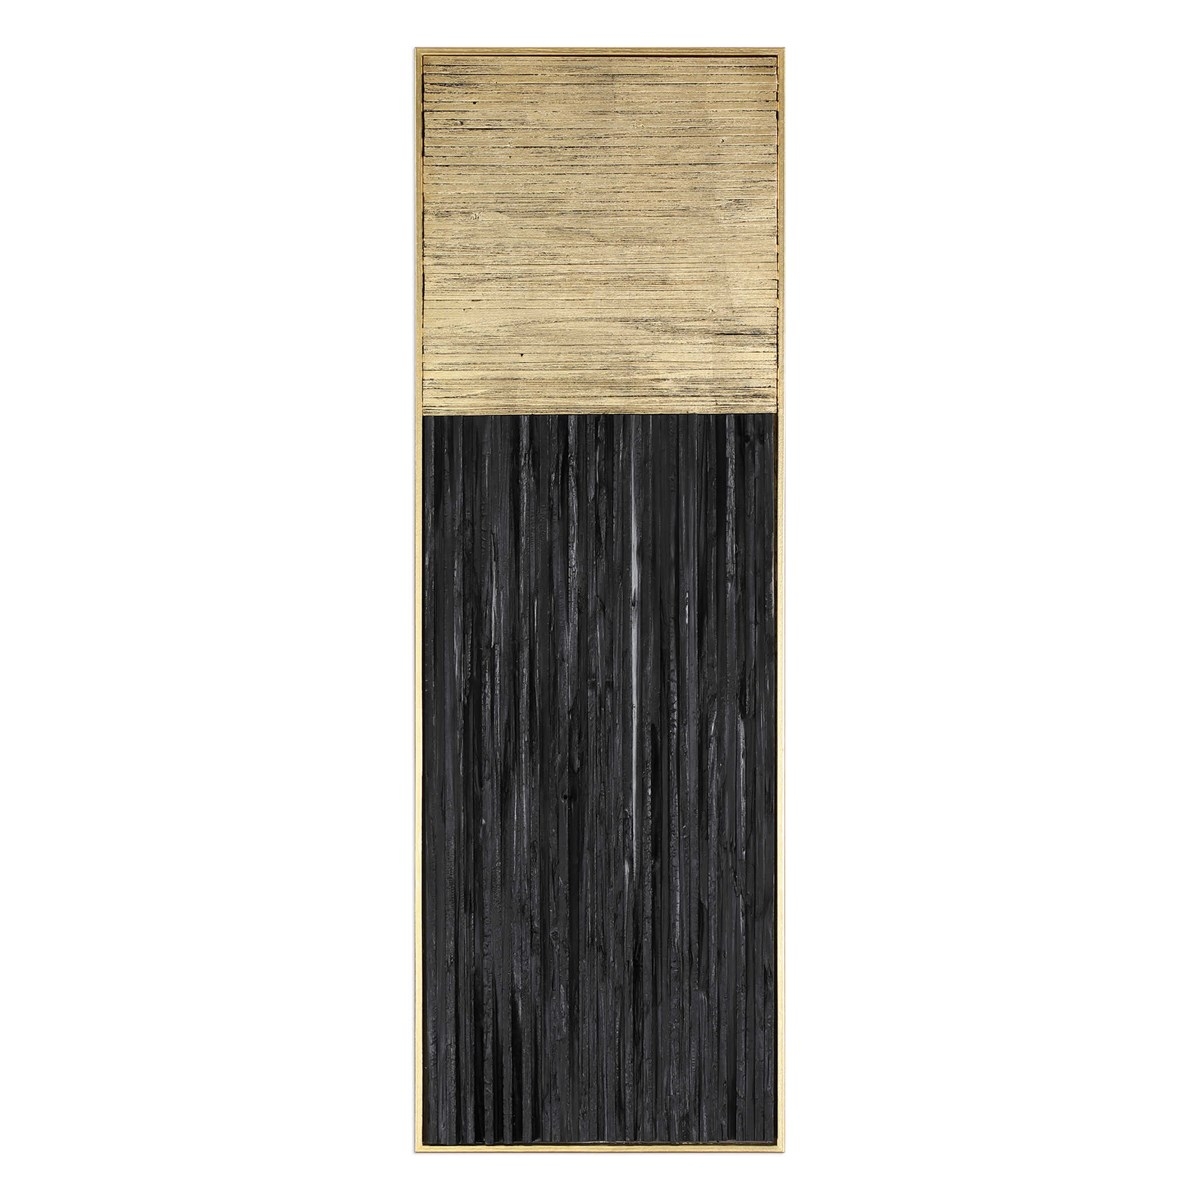 Pierra Wood Wall Panel - Image 0